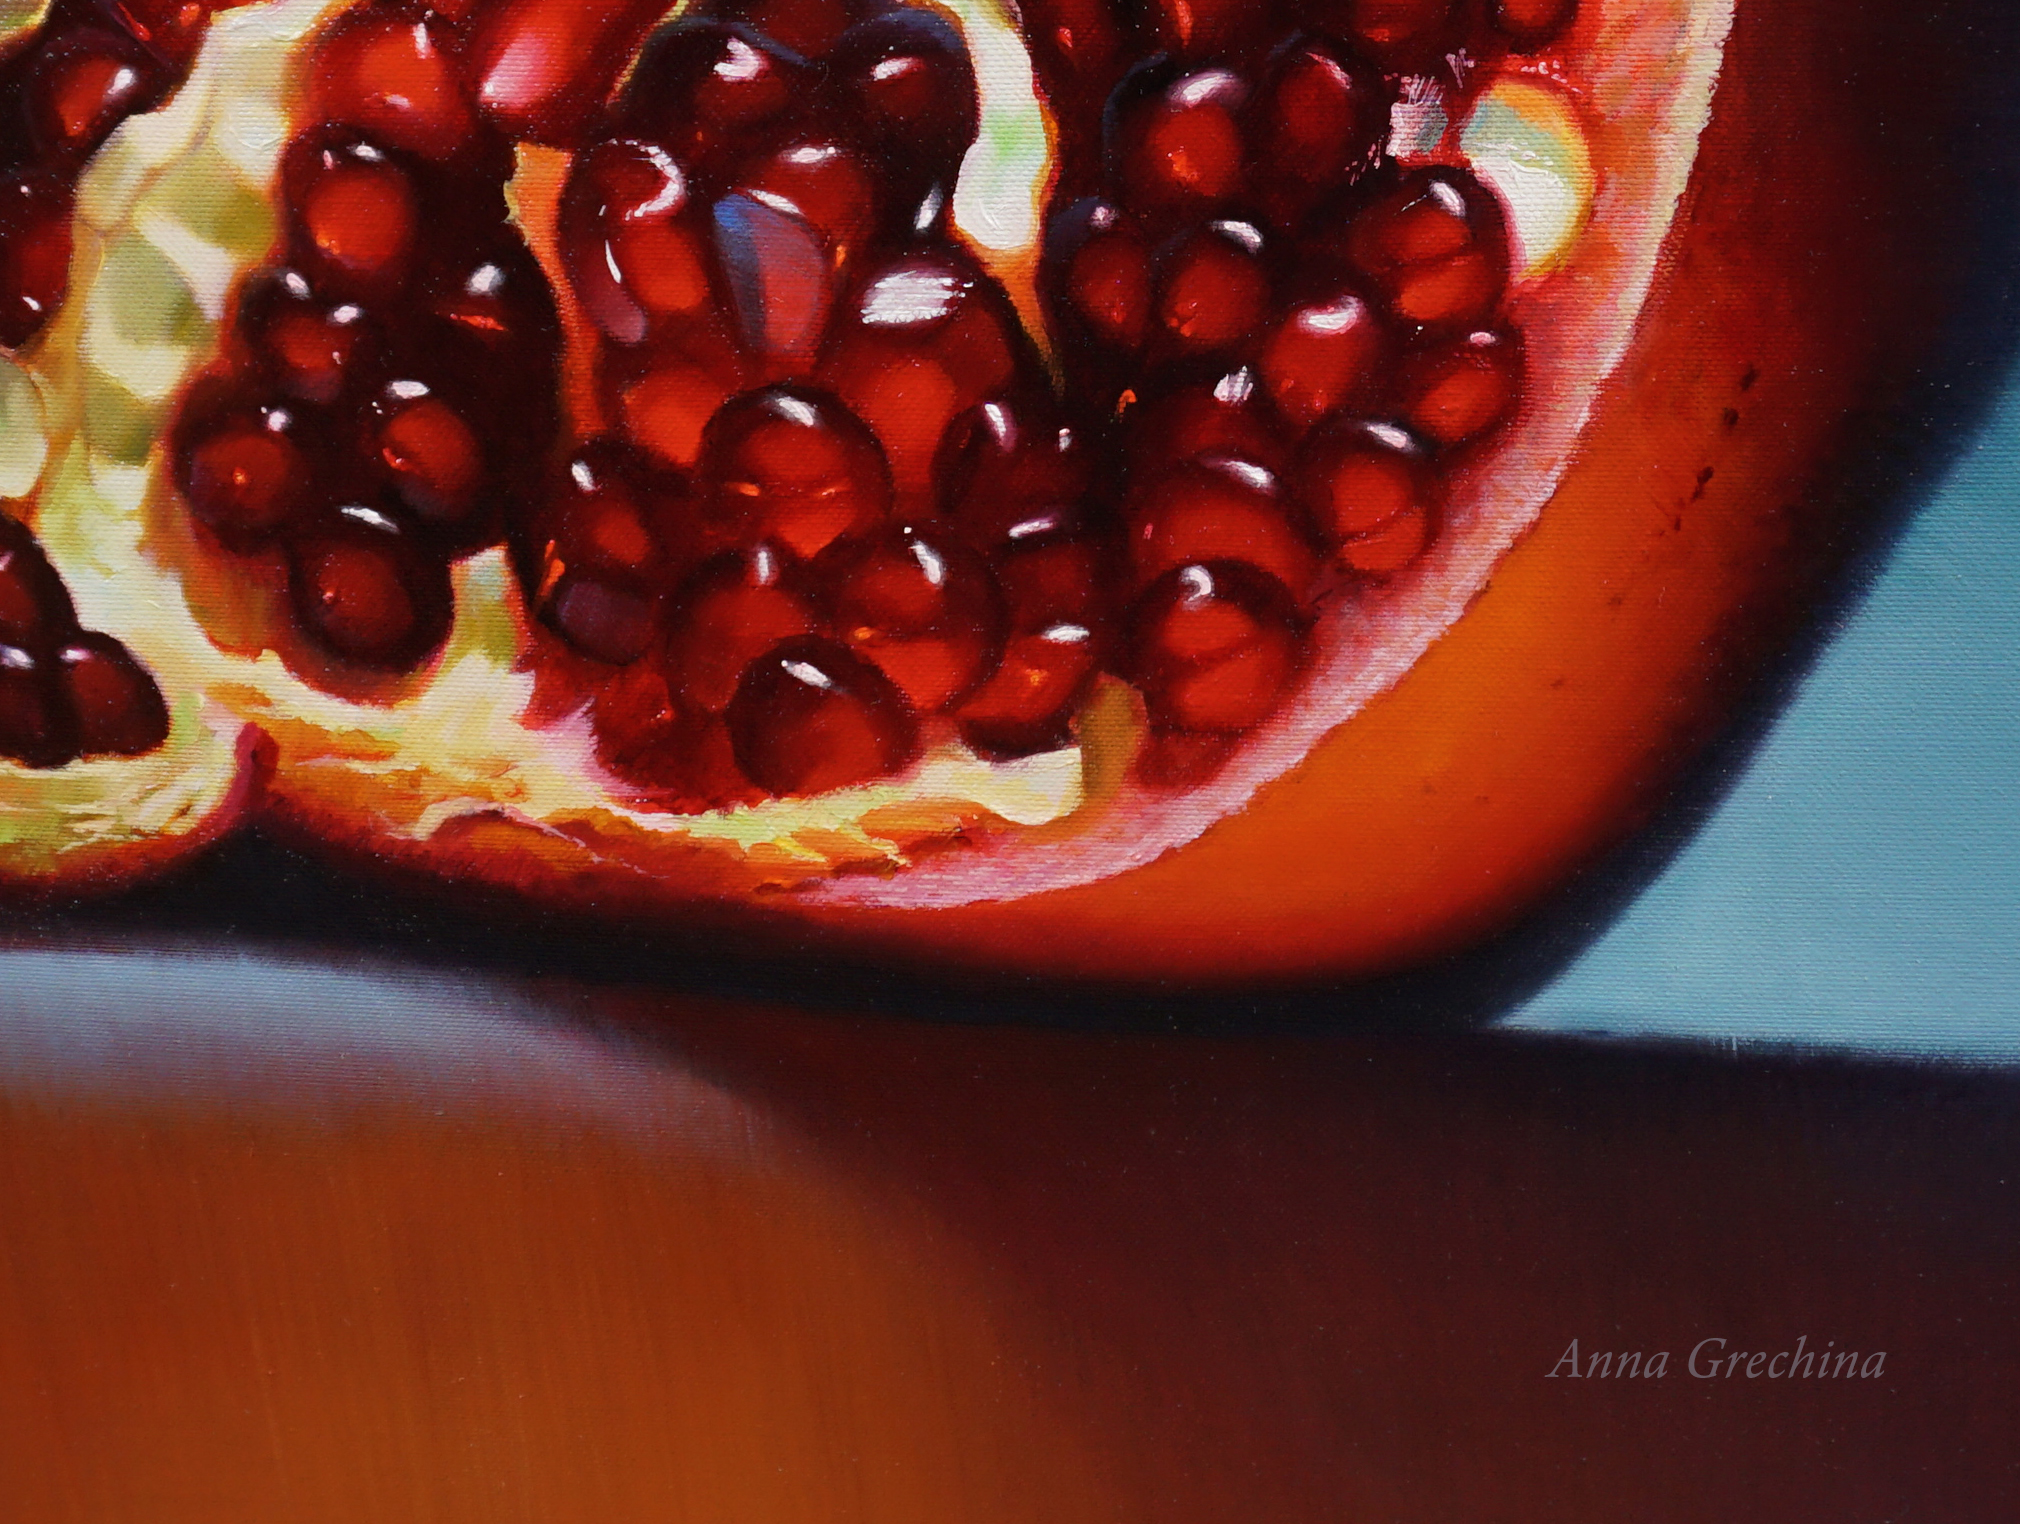 "Pomegranate heart". Hyperrealism, painting. Artist Anna Grechina.